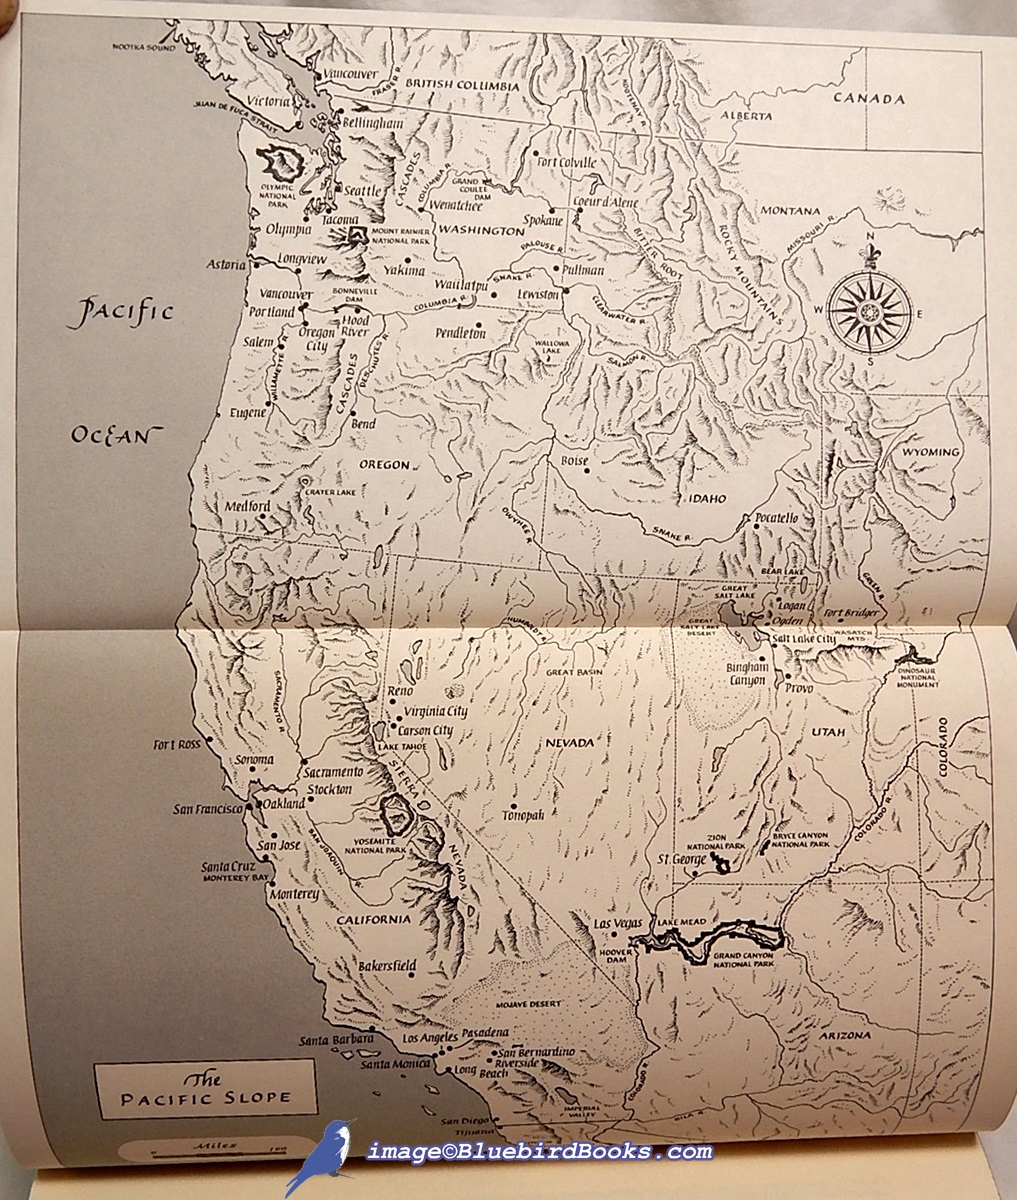 POMEROY, EARL - The Pacific Slope: A History of California, Oregon, Washington, Idaho, Utah and Nevada